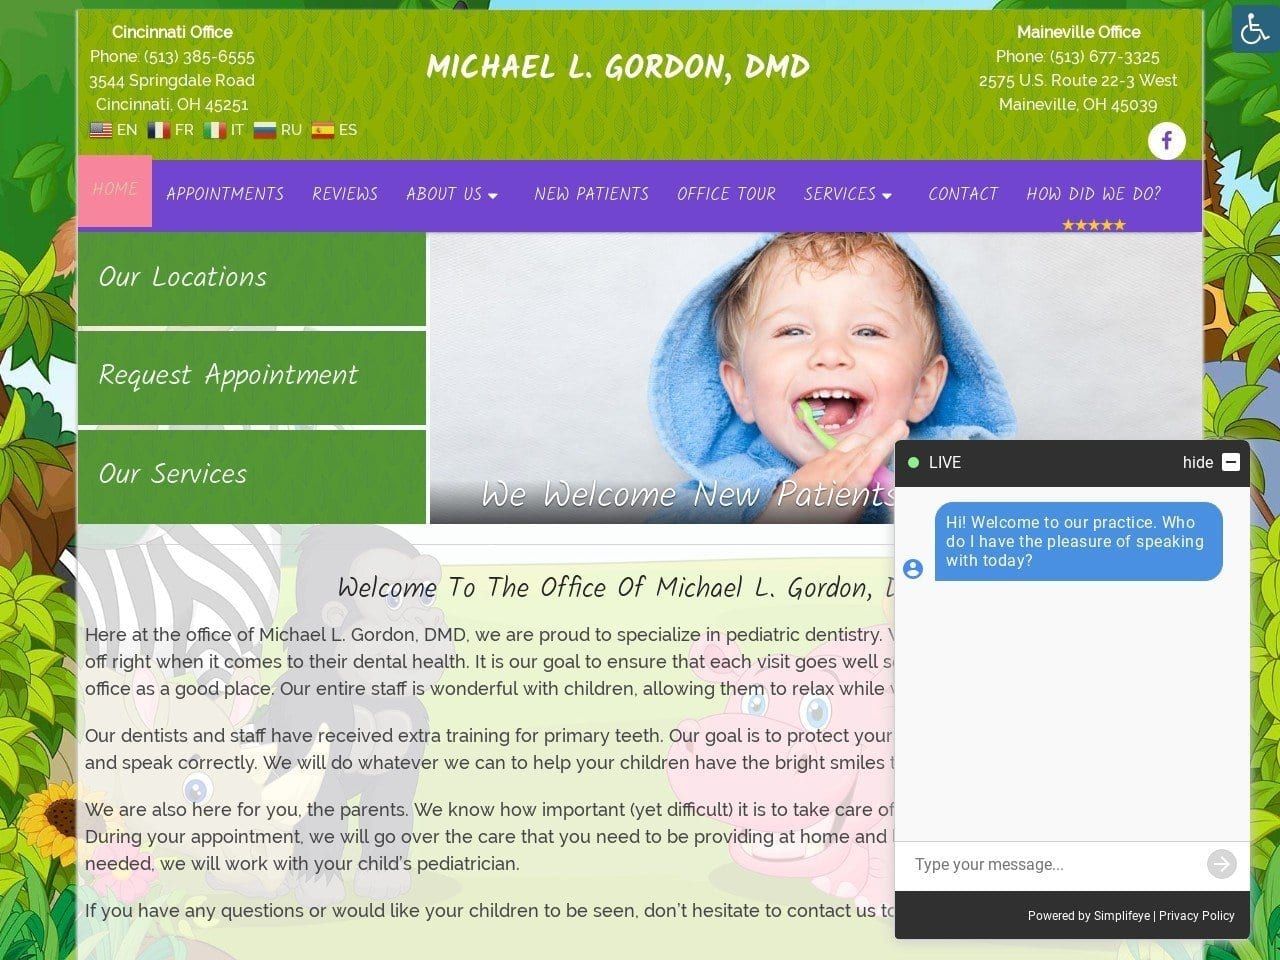 Michael L. Gordon D.M.D. Website Screenshot from cincipediatricdentist.com